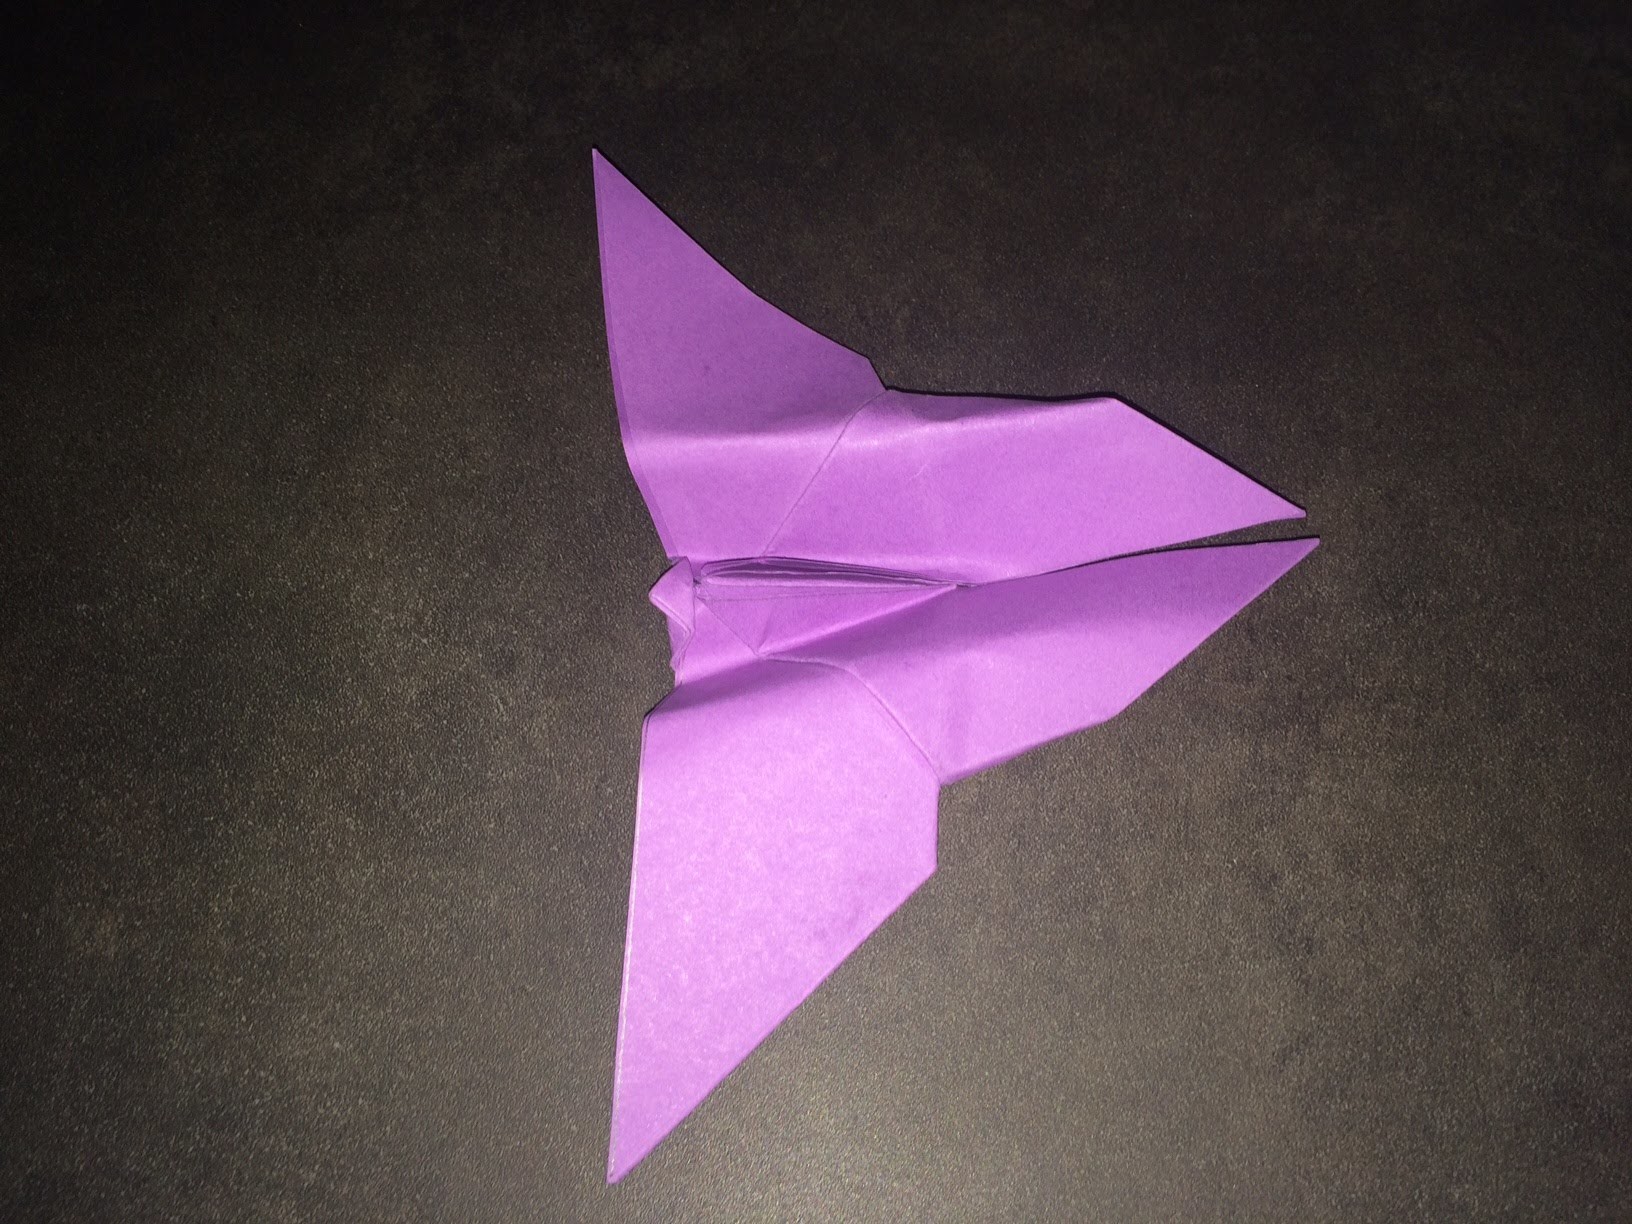 Tuto Origami : Le Papillon Facile